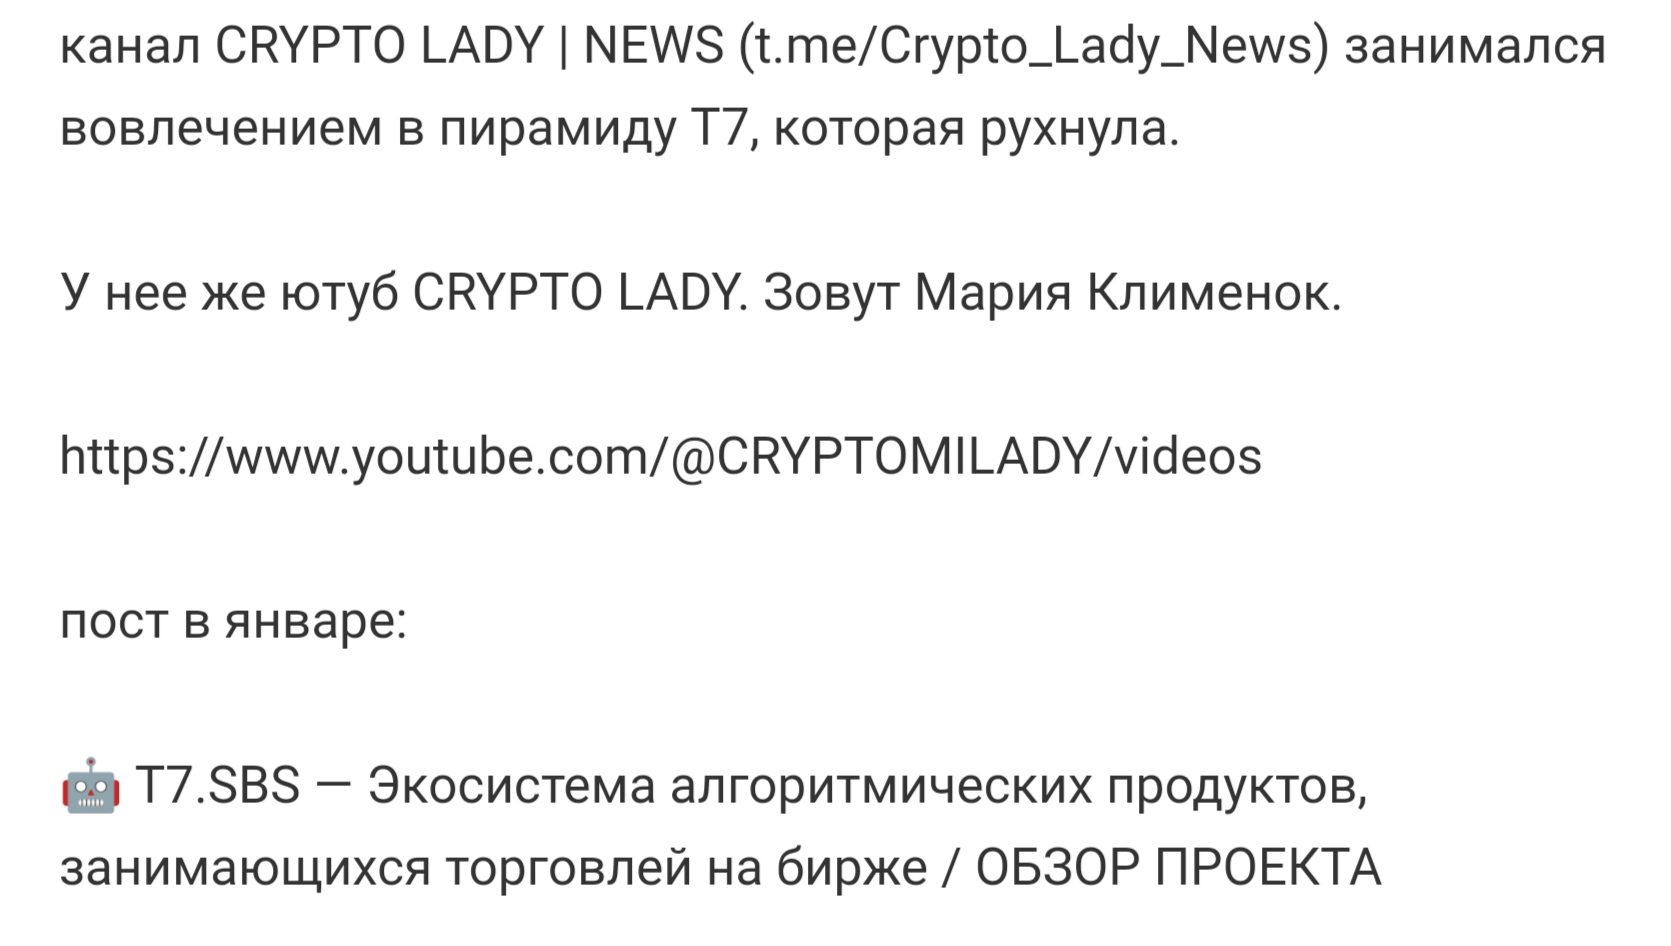 Crypto Lady News отзывы